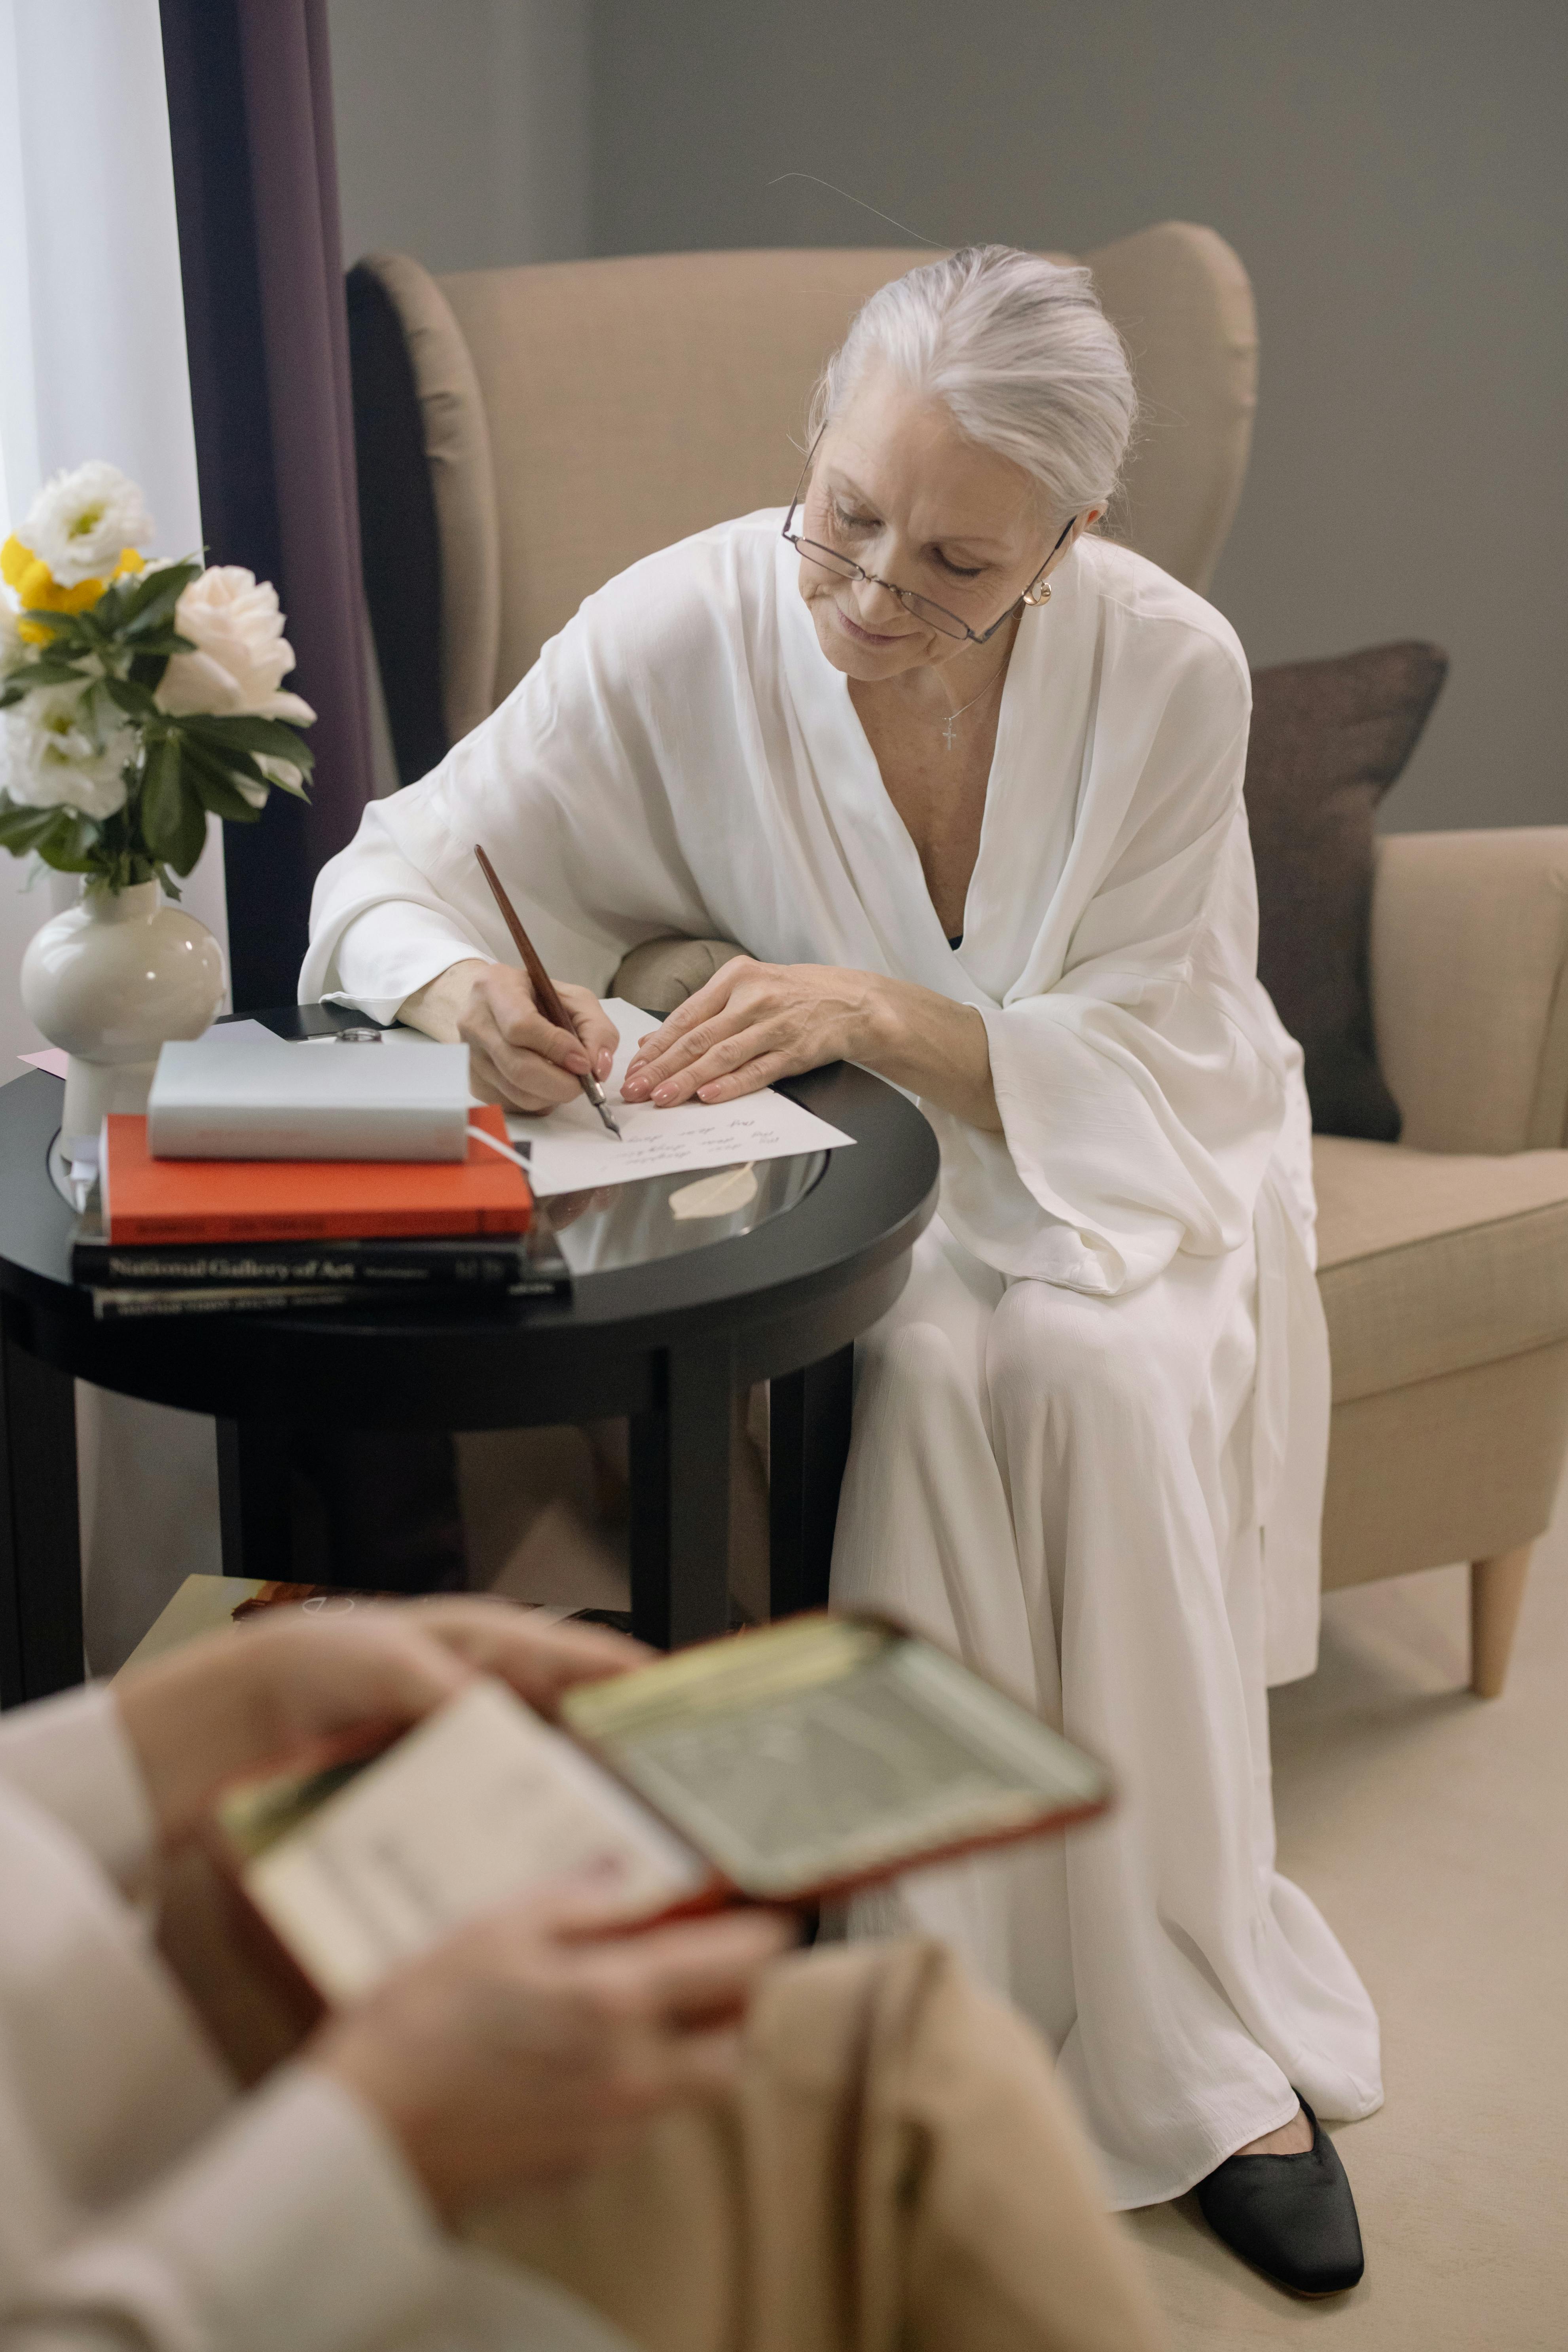 Elderly woman writes a letter | Source: Pexels